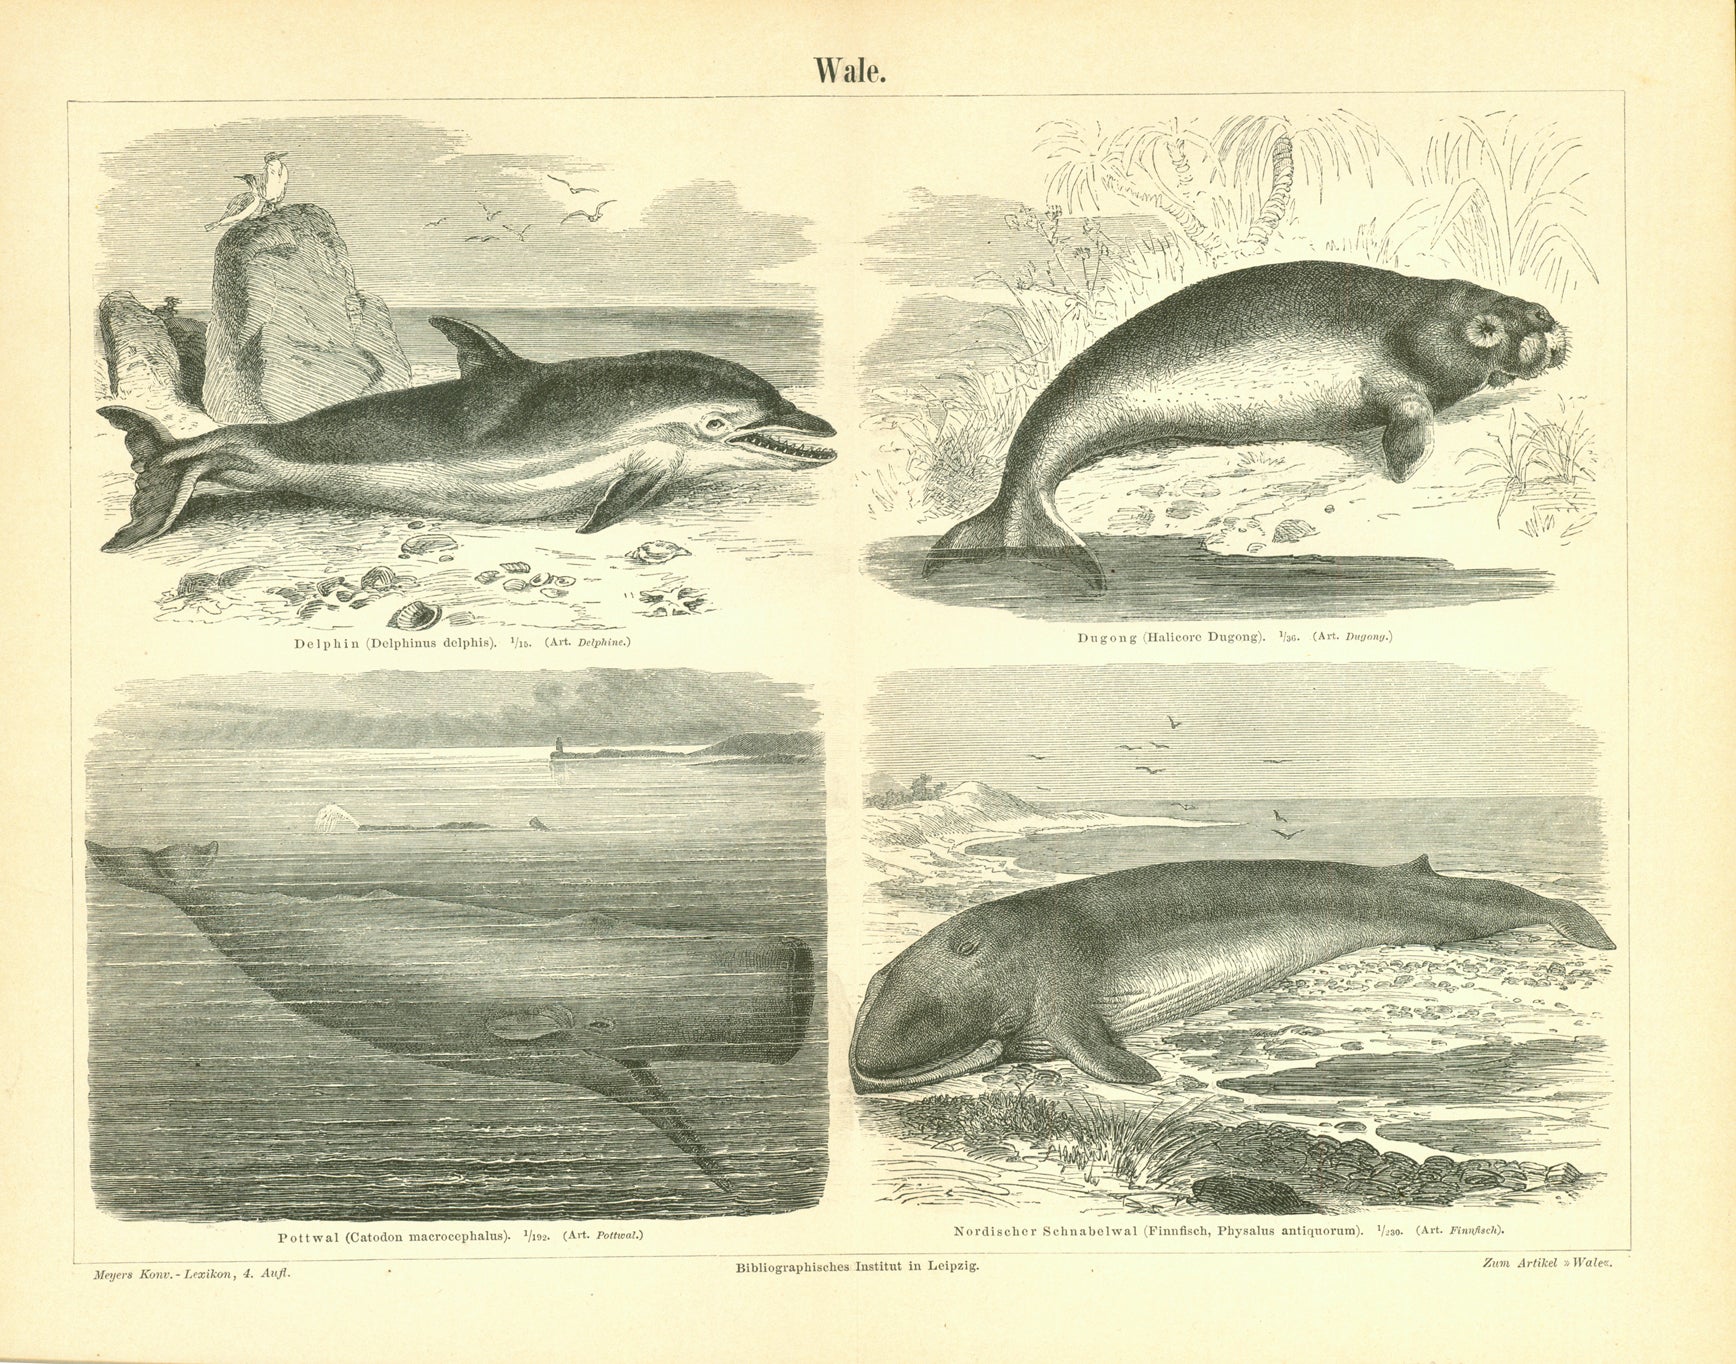 "Wale"  "Delphin (Delphinus dolphis) Dugong (Hallicore Dugong)" "Pottwal (Catodon macrocephalus) Nordischer Schnabelwal (Finnfisch Pysalus antiquorum)"  Wood engravings published ca 1890. 